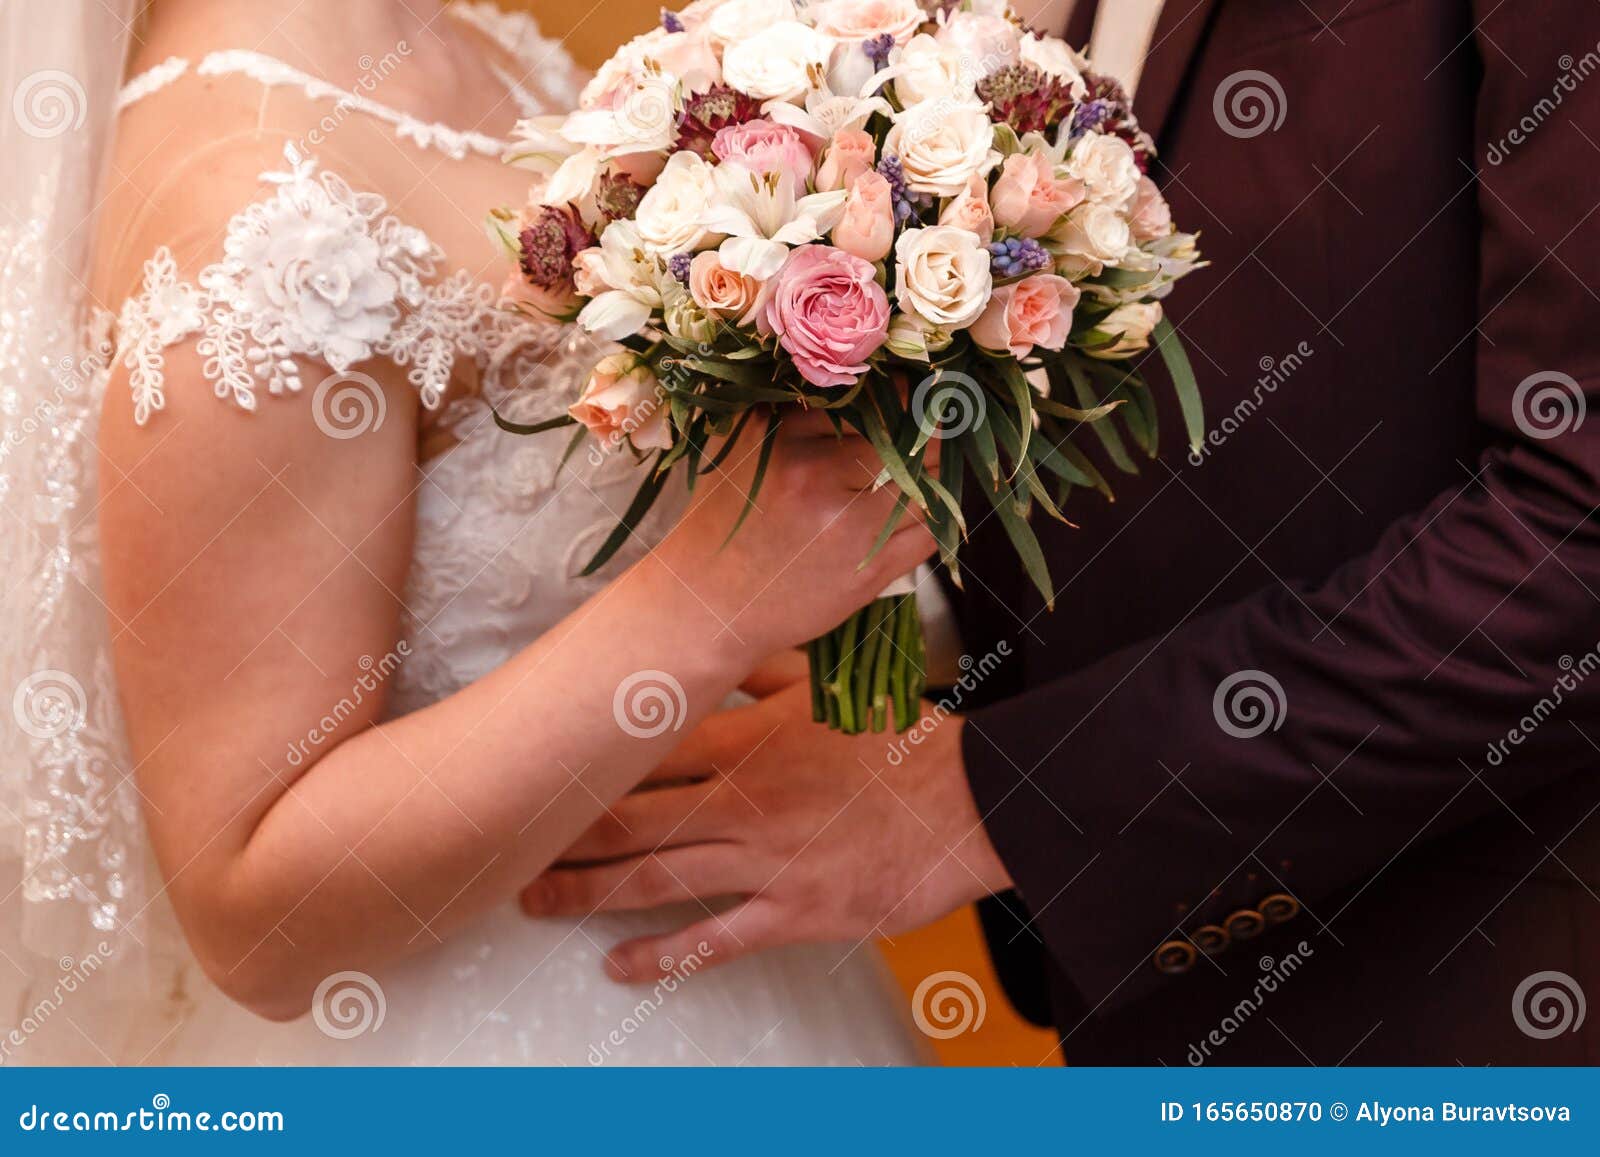 Women cuddle at wedding stock photo. Image of dating - 165650870